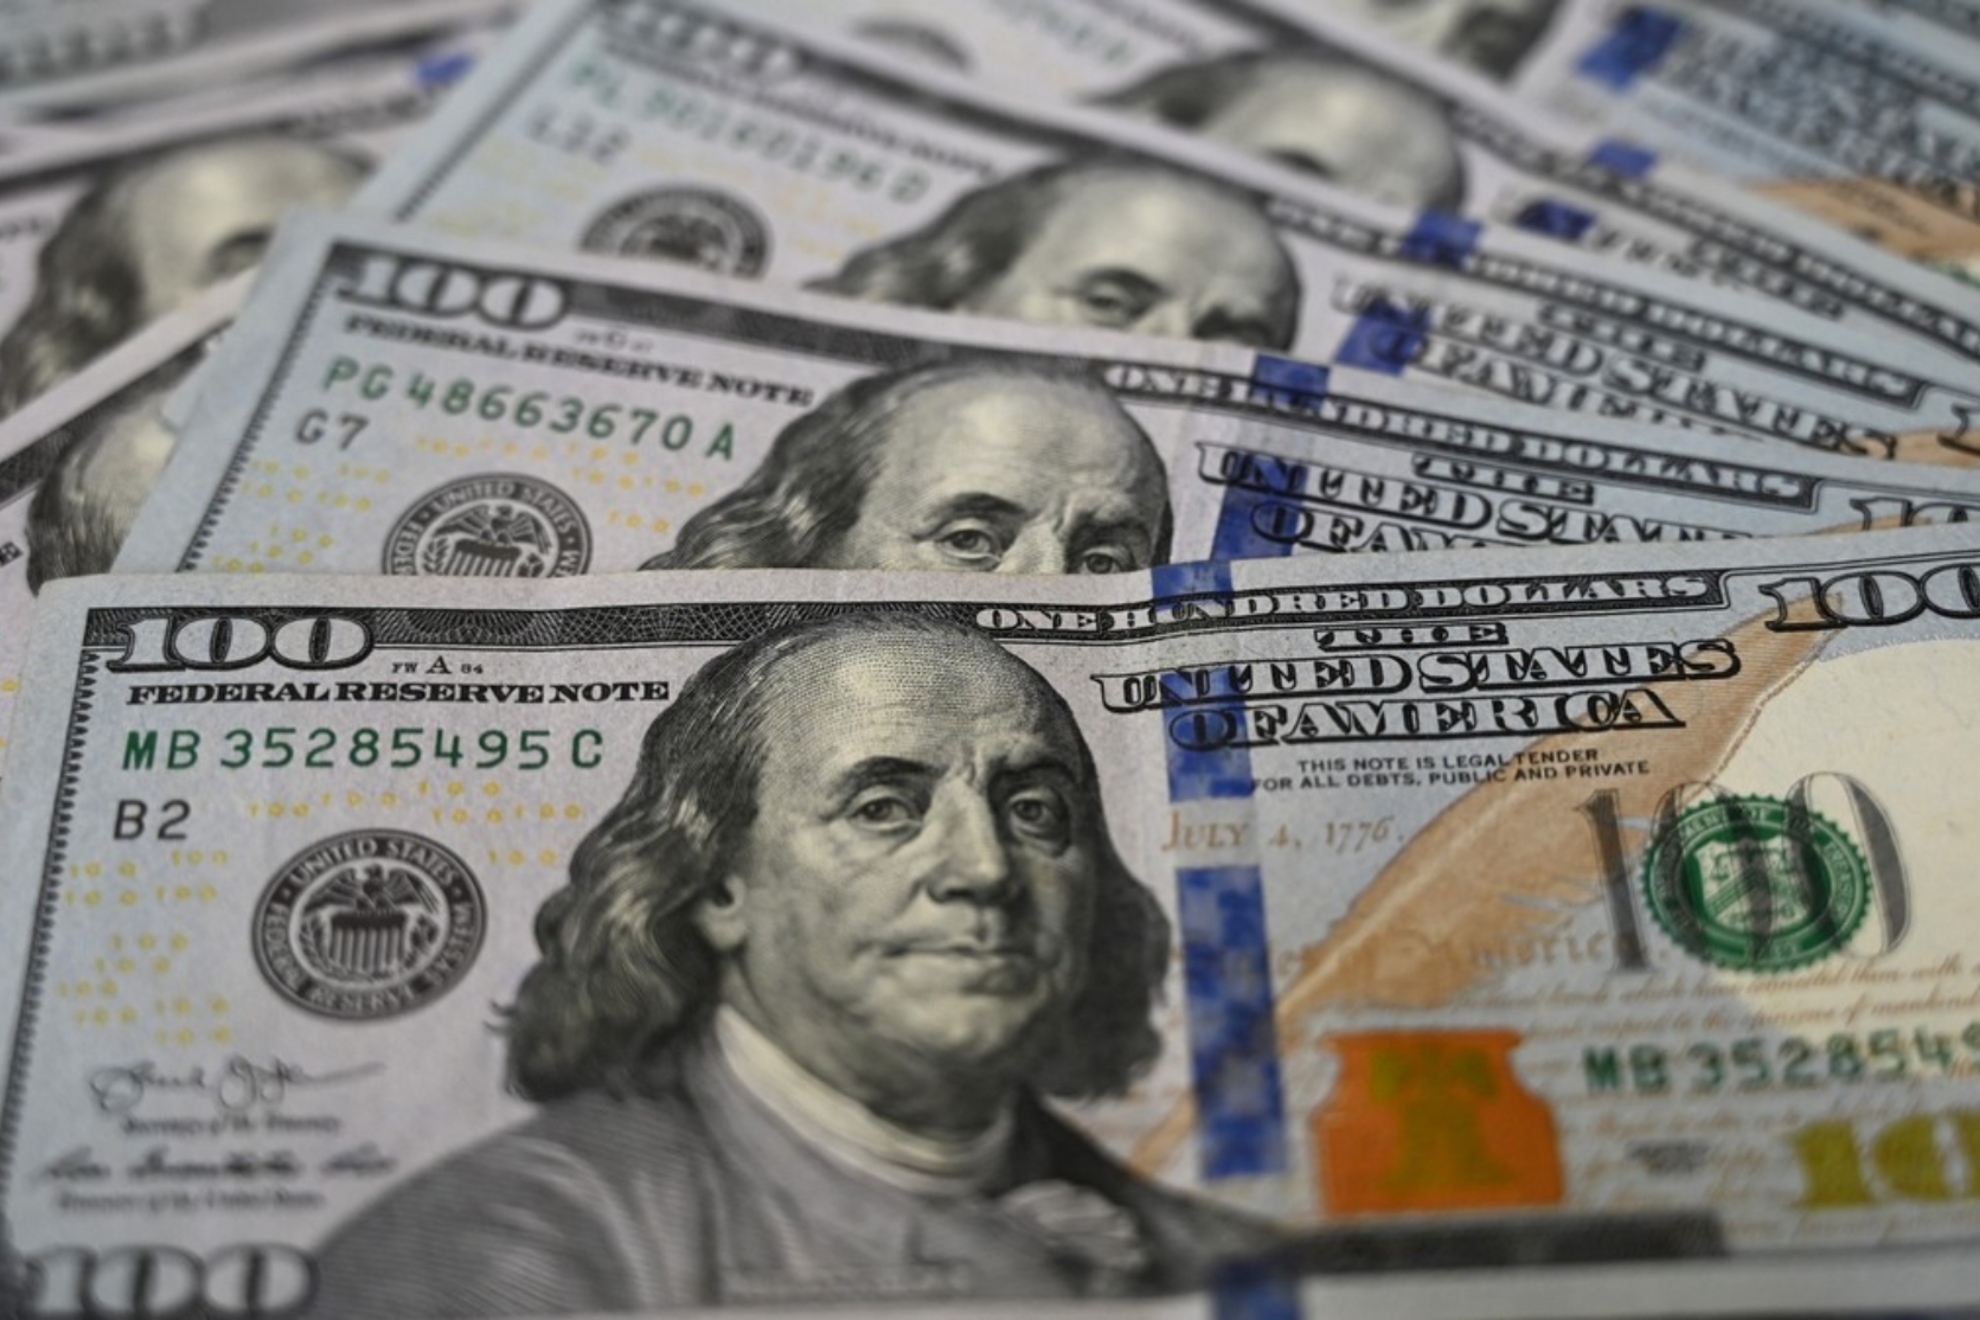 Many hundred dollar bills with Benjamin Franklin's face on them.